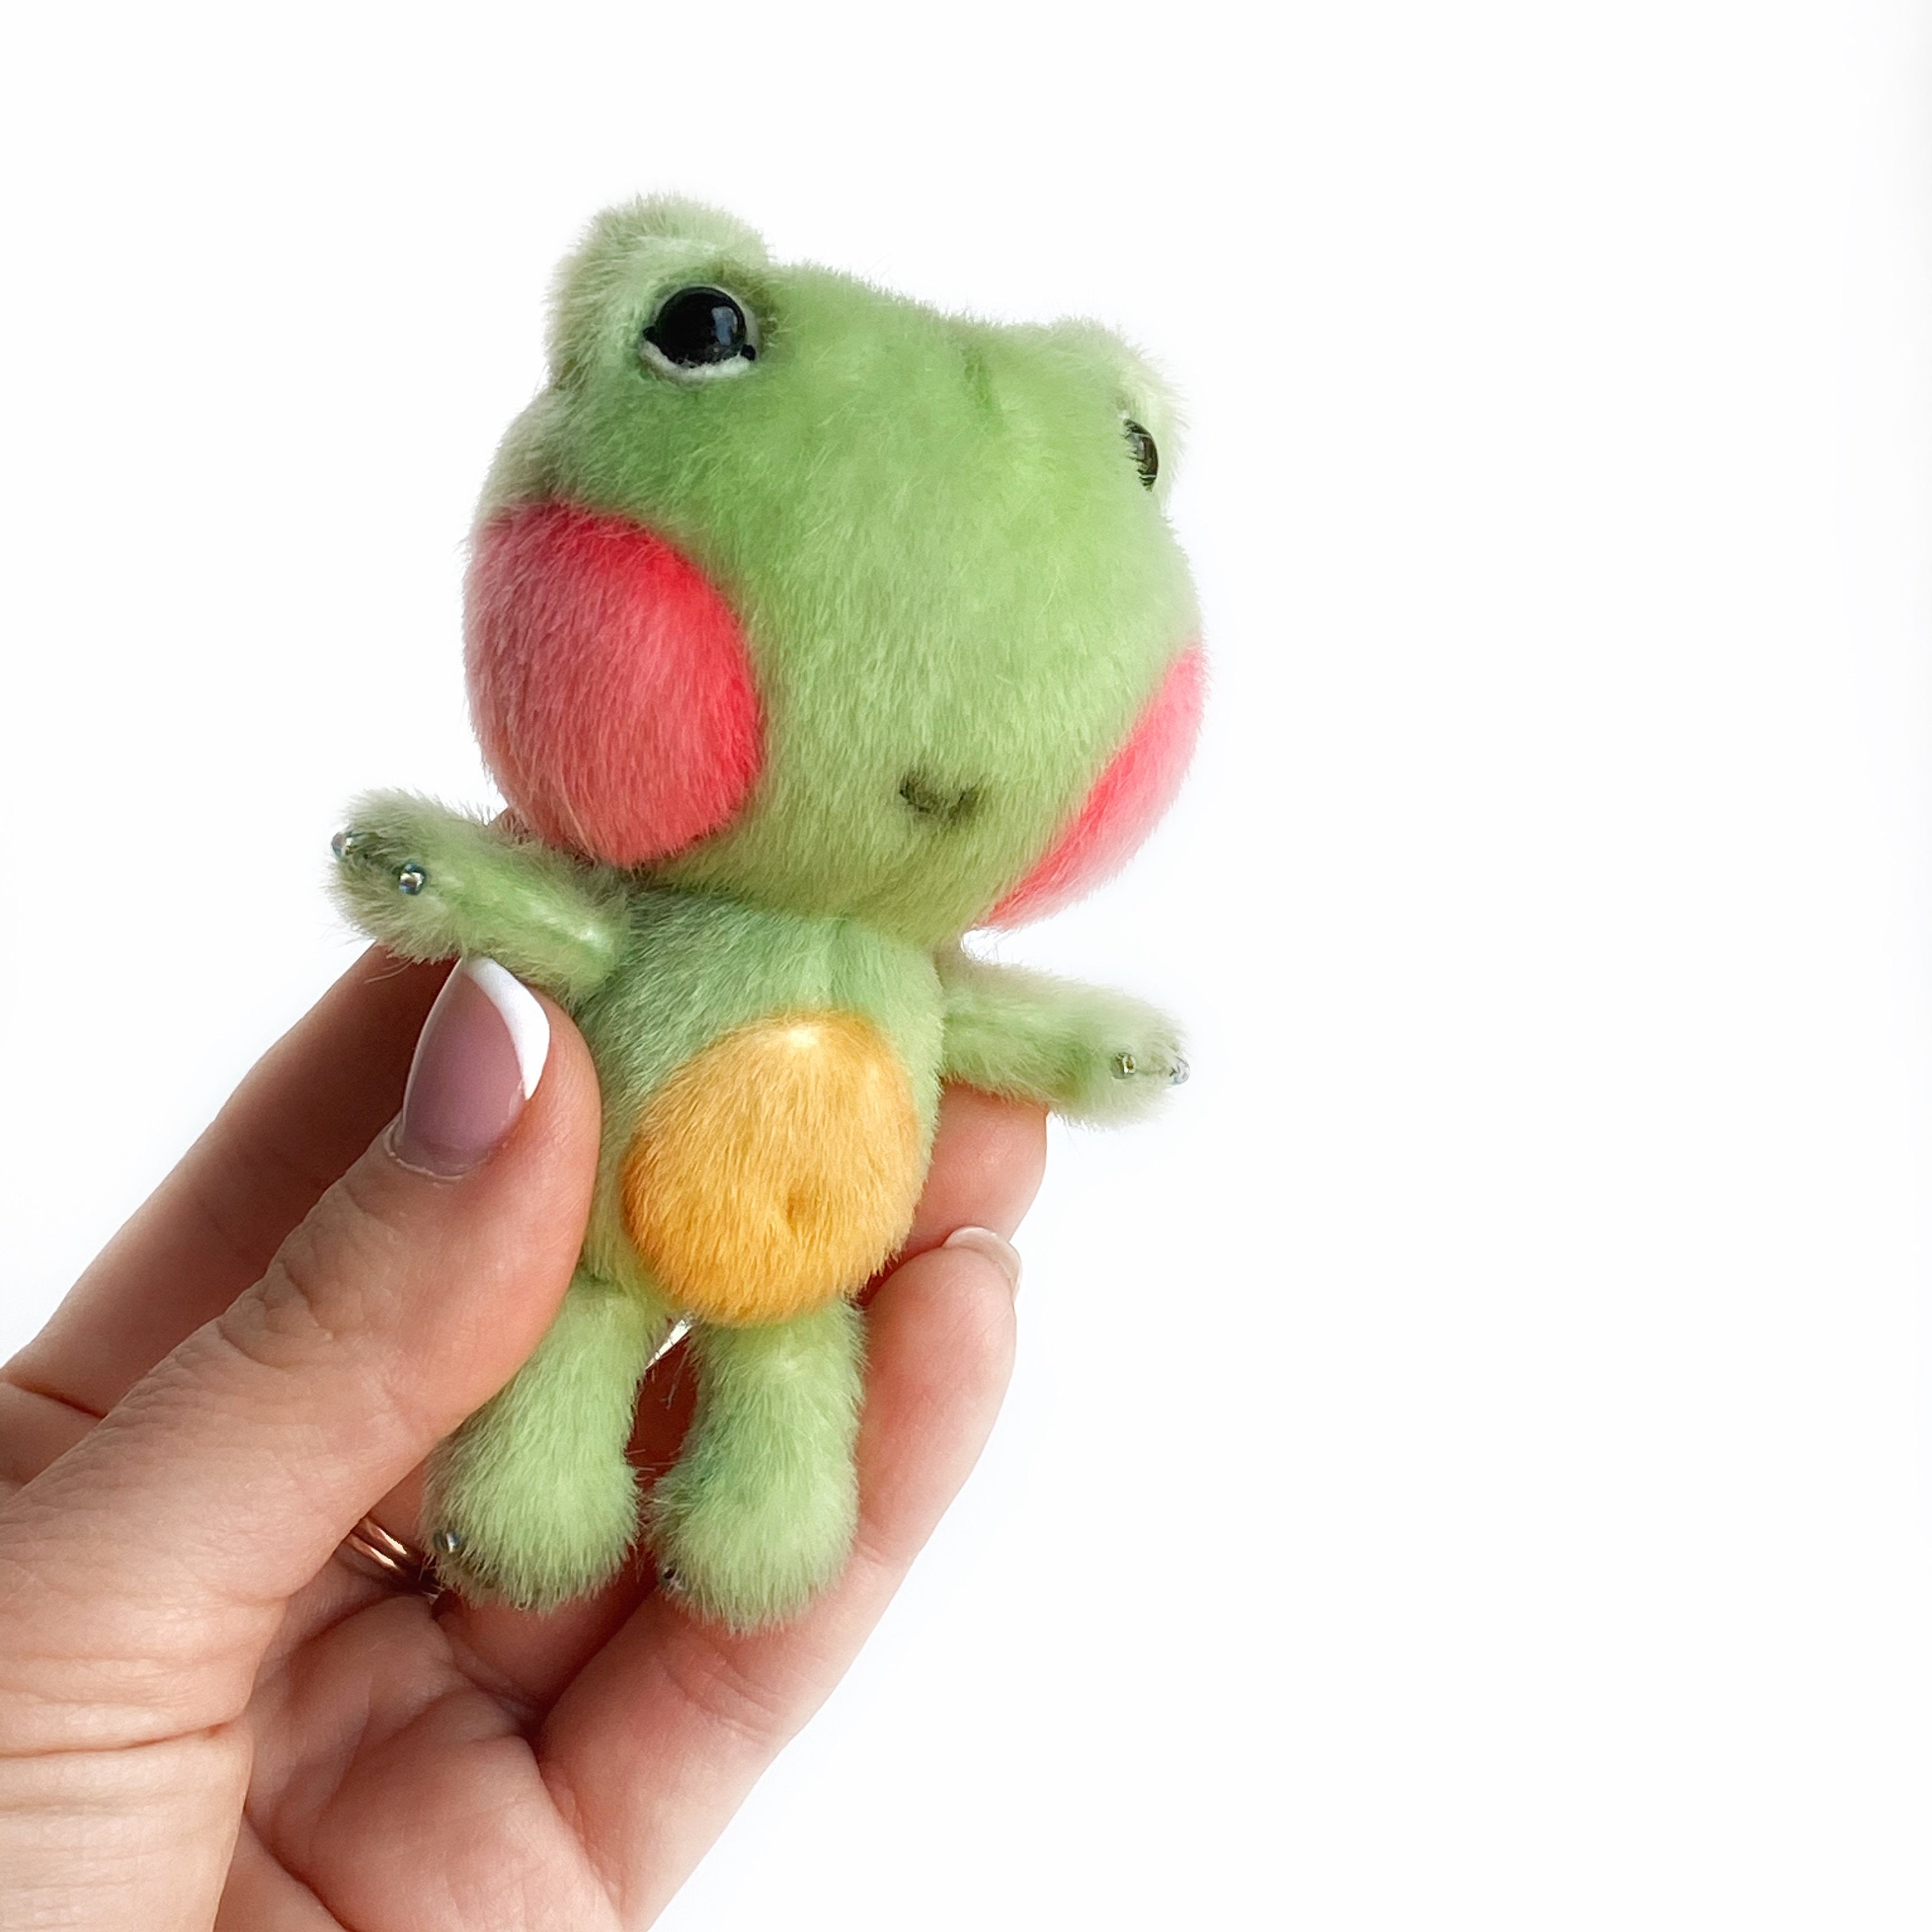 Frog PDF sewing pattern Video tutorial DIY stuffed toy pattern DIY frogs toy kids toy pattern easy to sew for beginners TSminibears